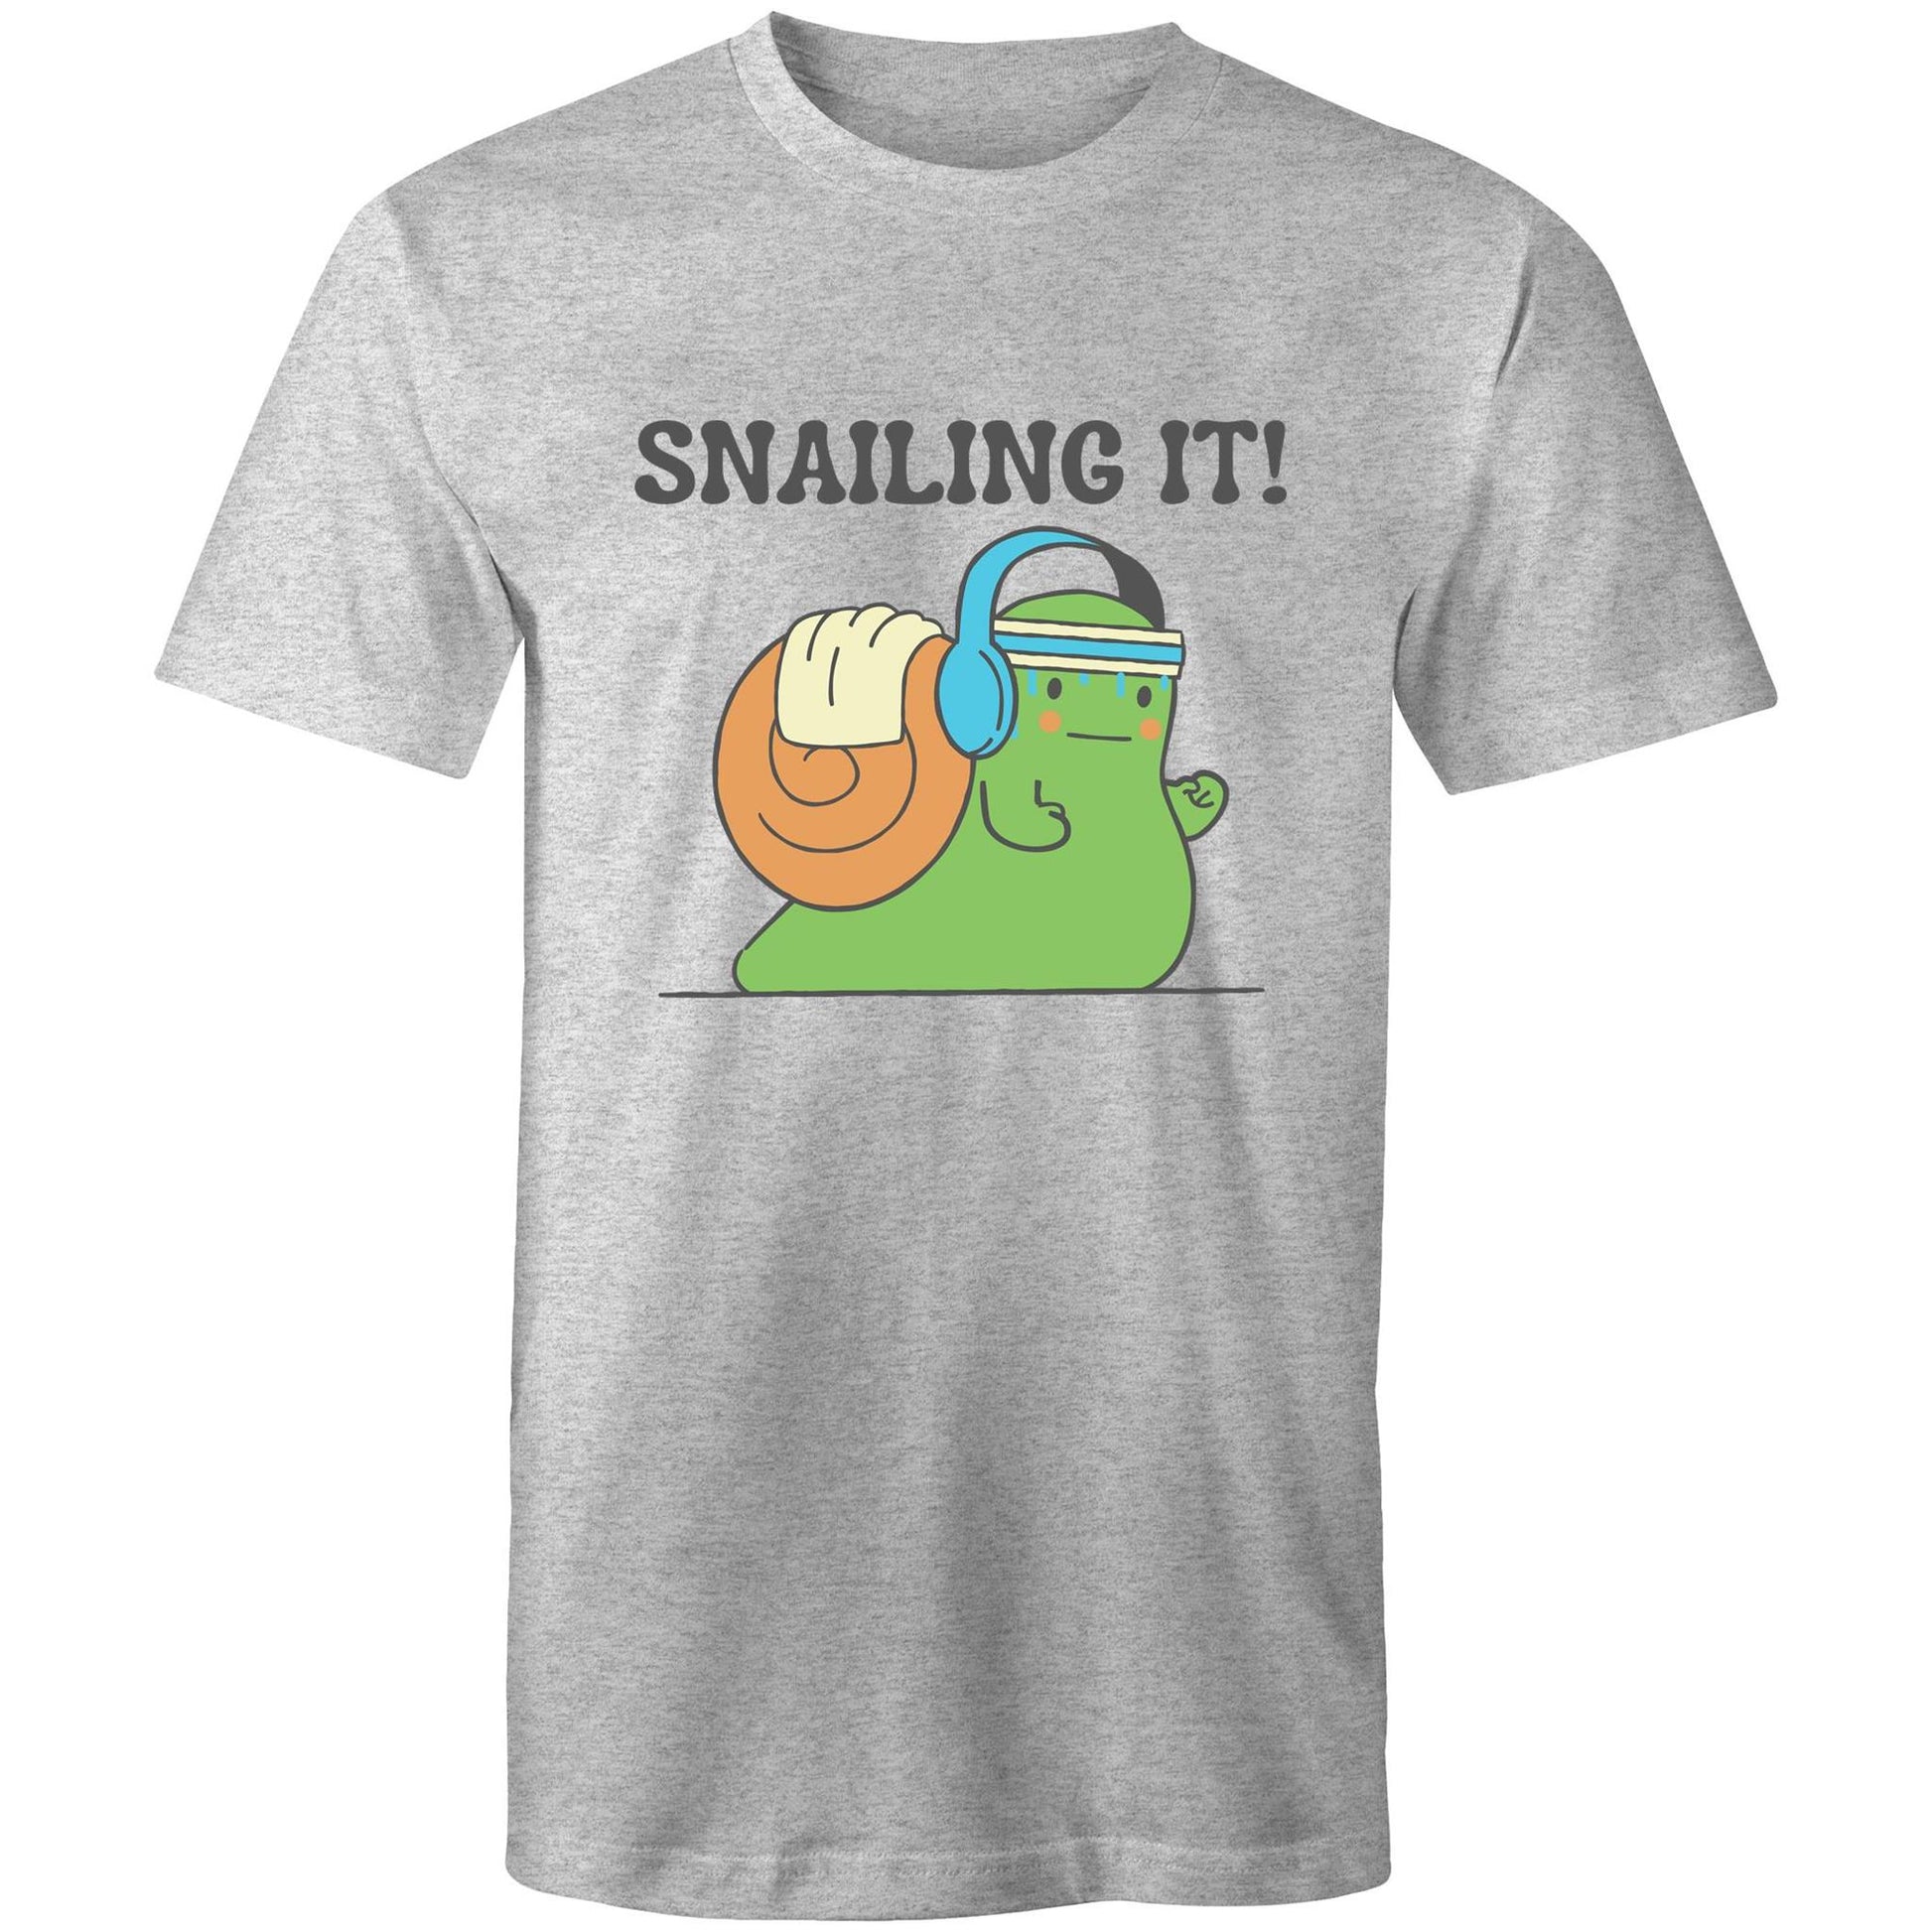 Snailing It - Short Sleeve T-shirt Grey Marle Fitness T-shirt